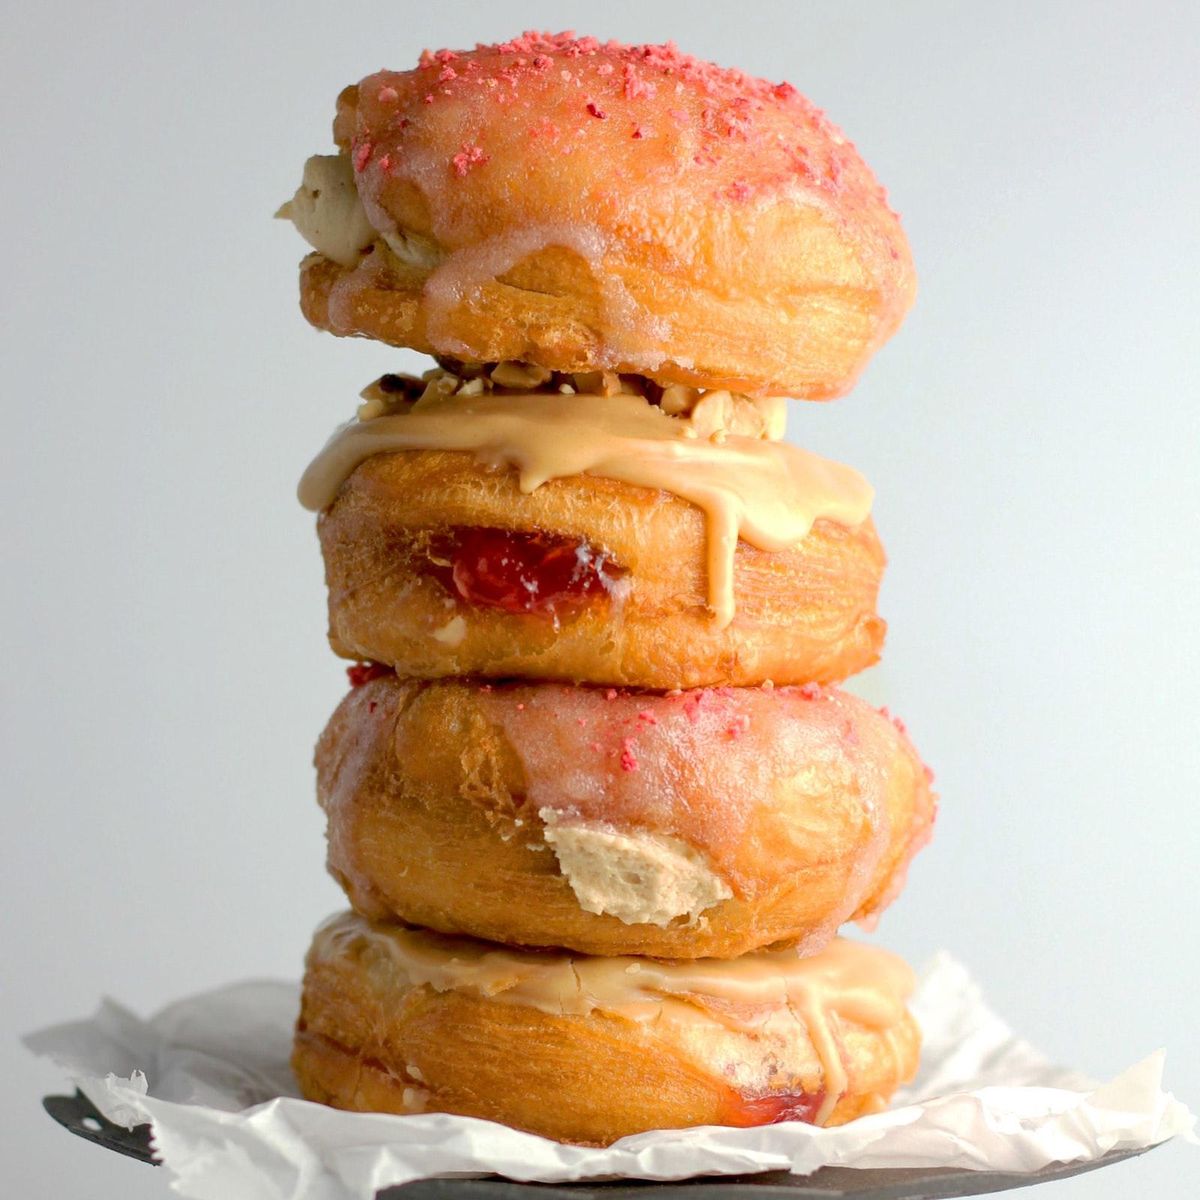 jelly filled paczki donuts